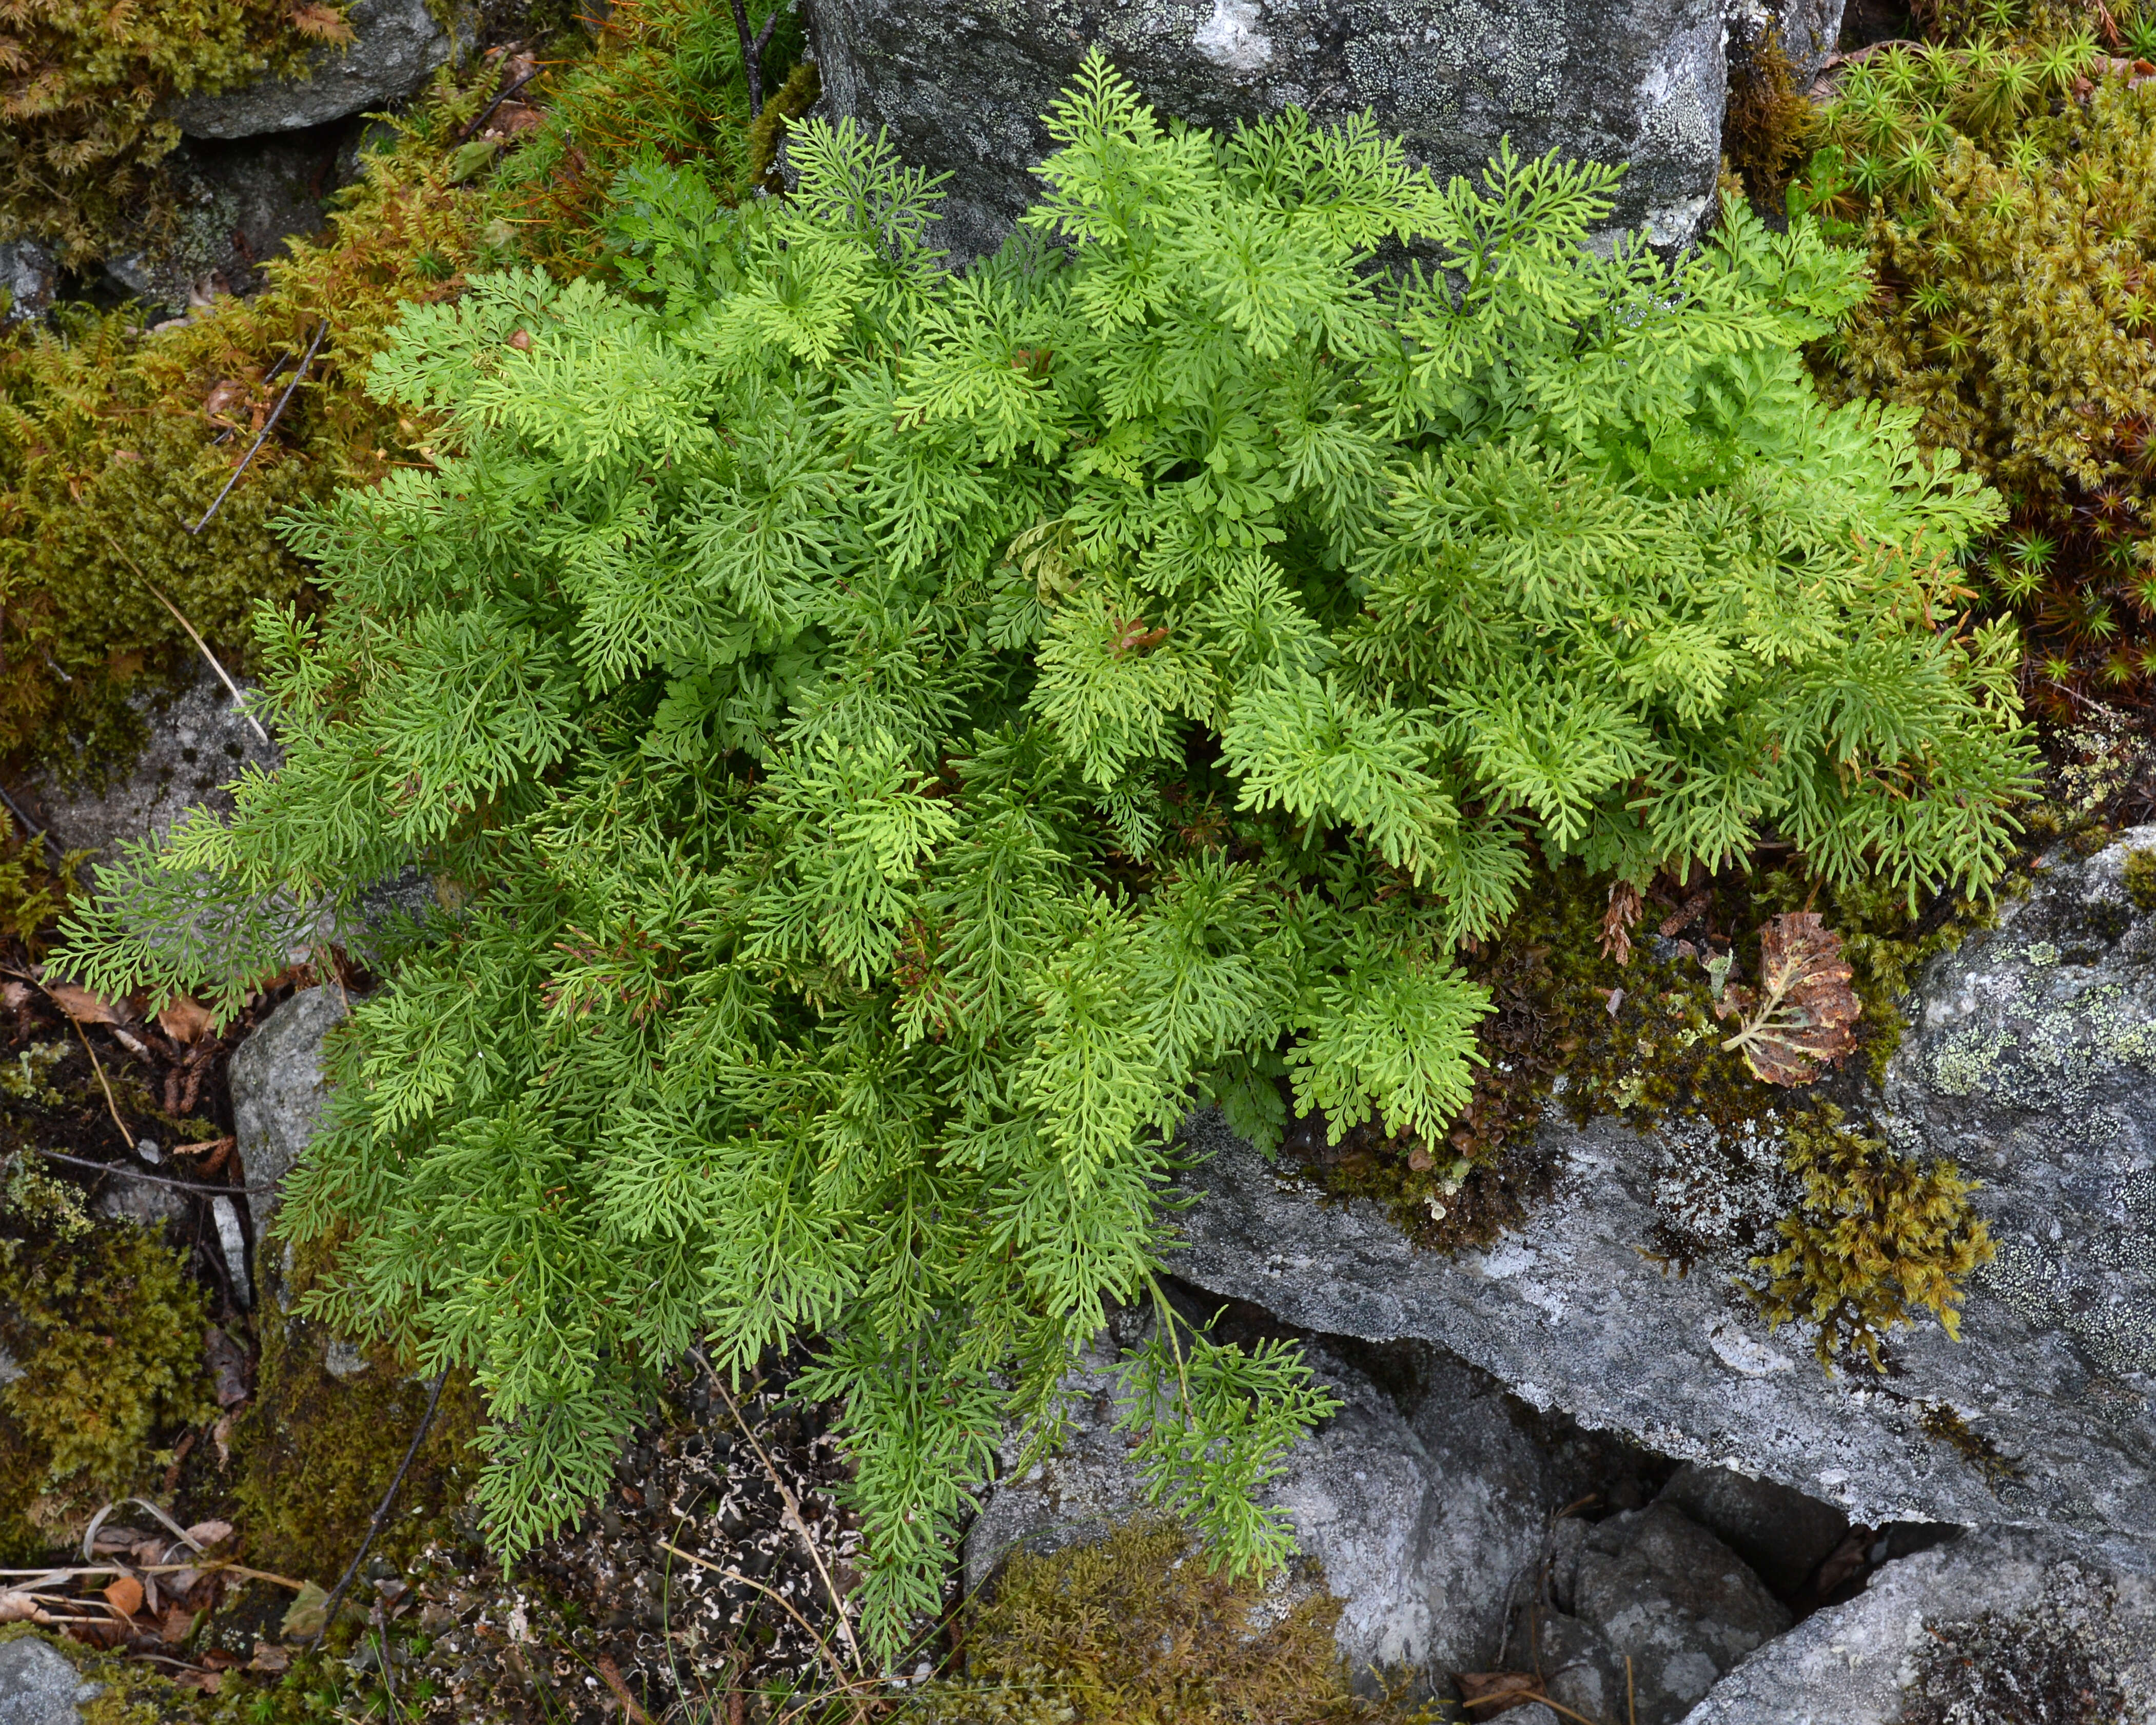 Image of parsley fern